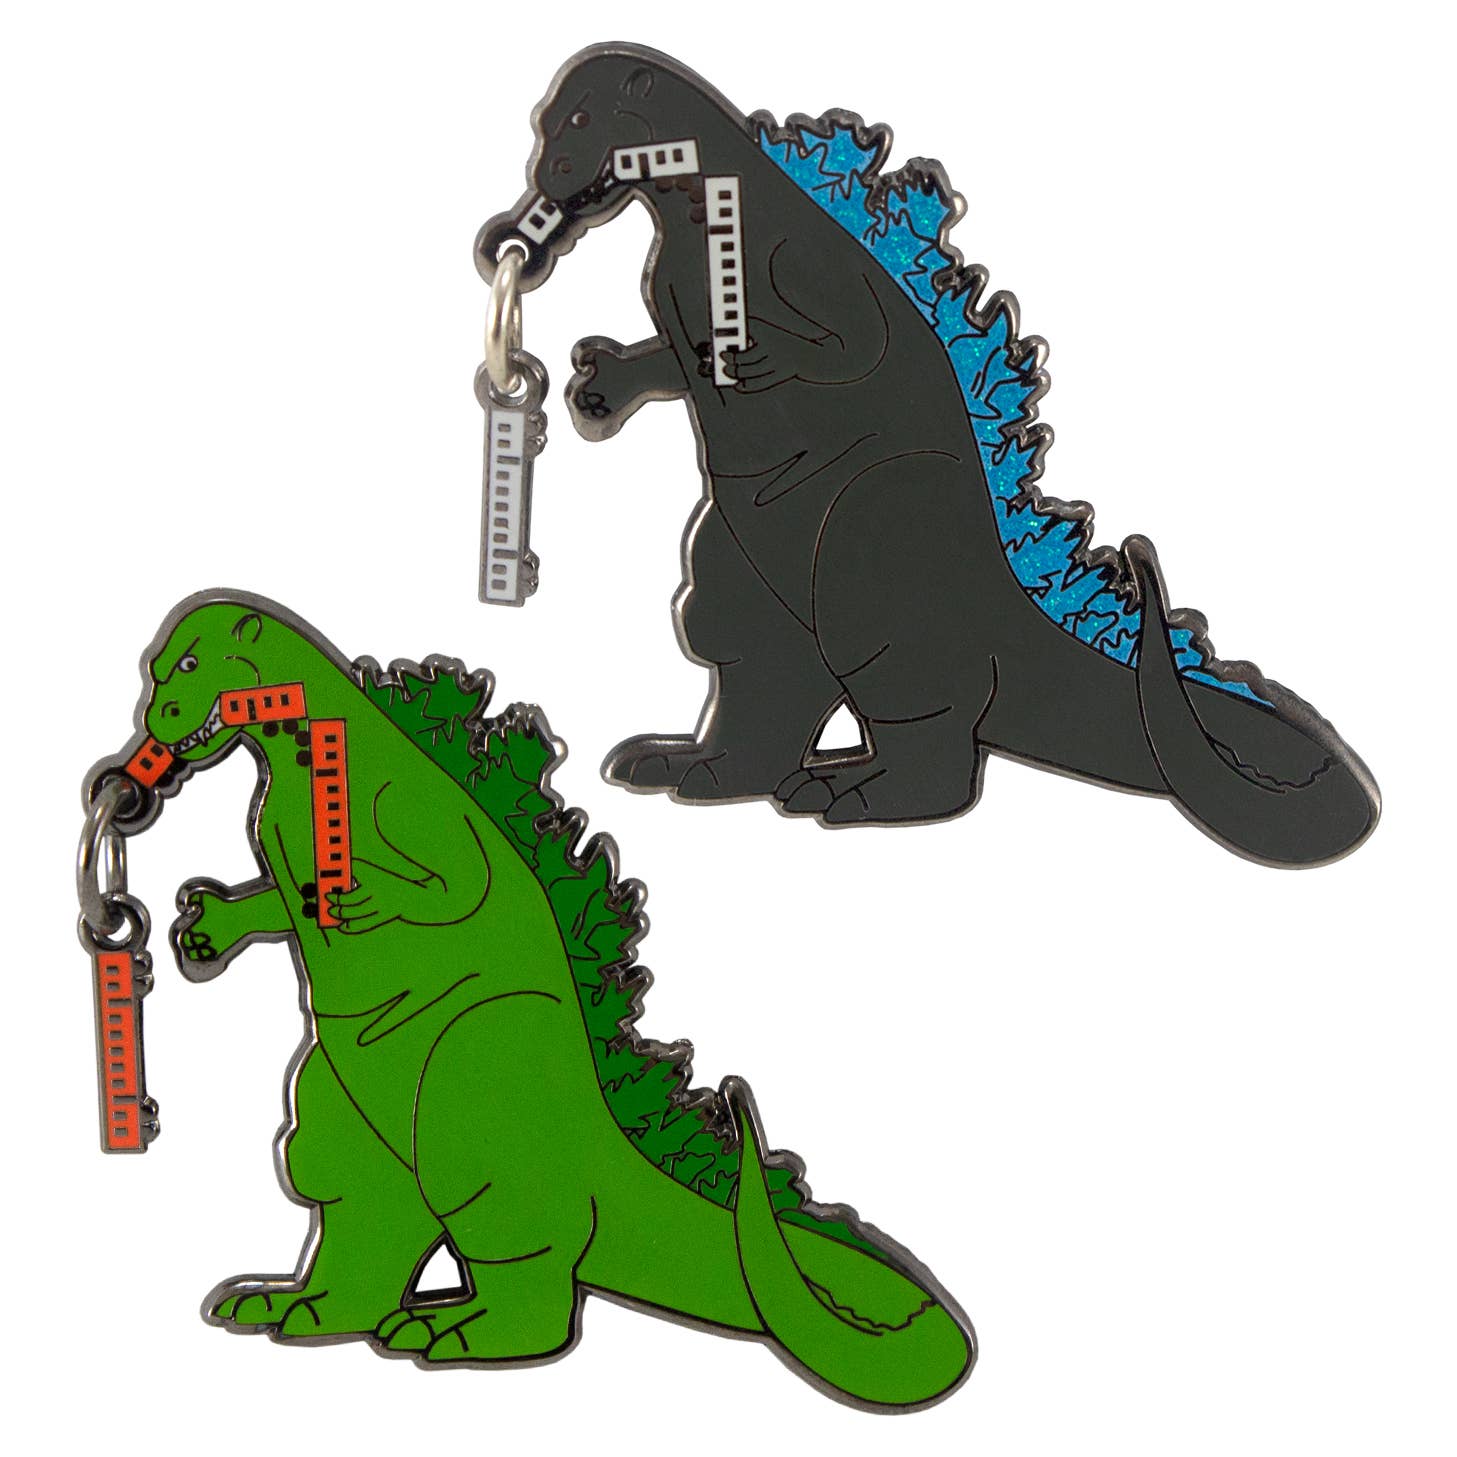 Godzilla [Atomic Glitter or Cartoon] (enamel pin): Atomic Glitter